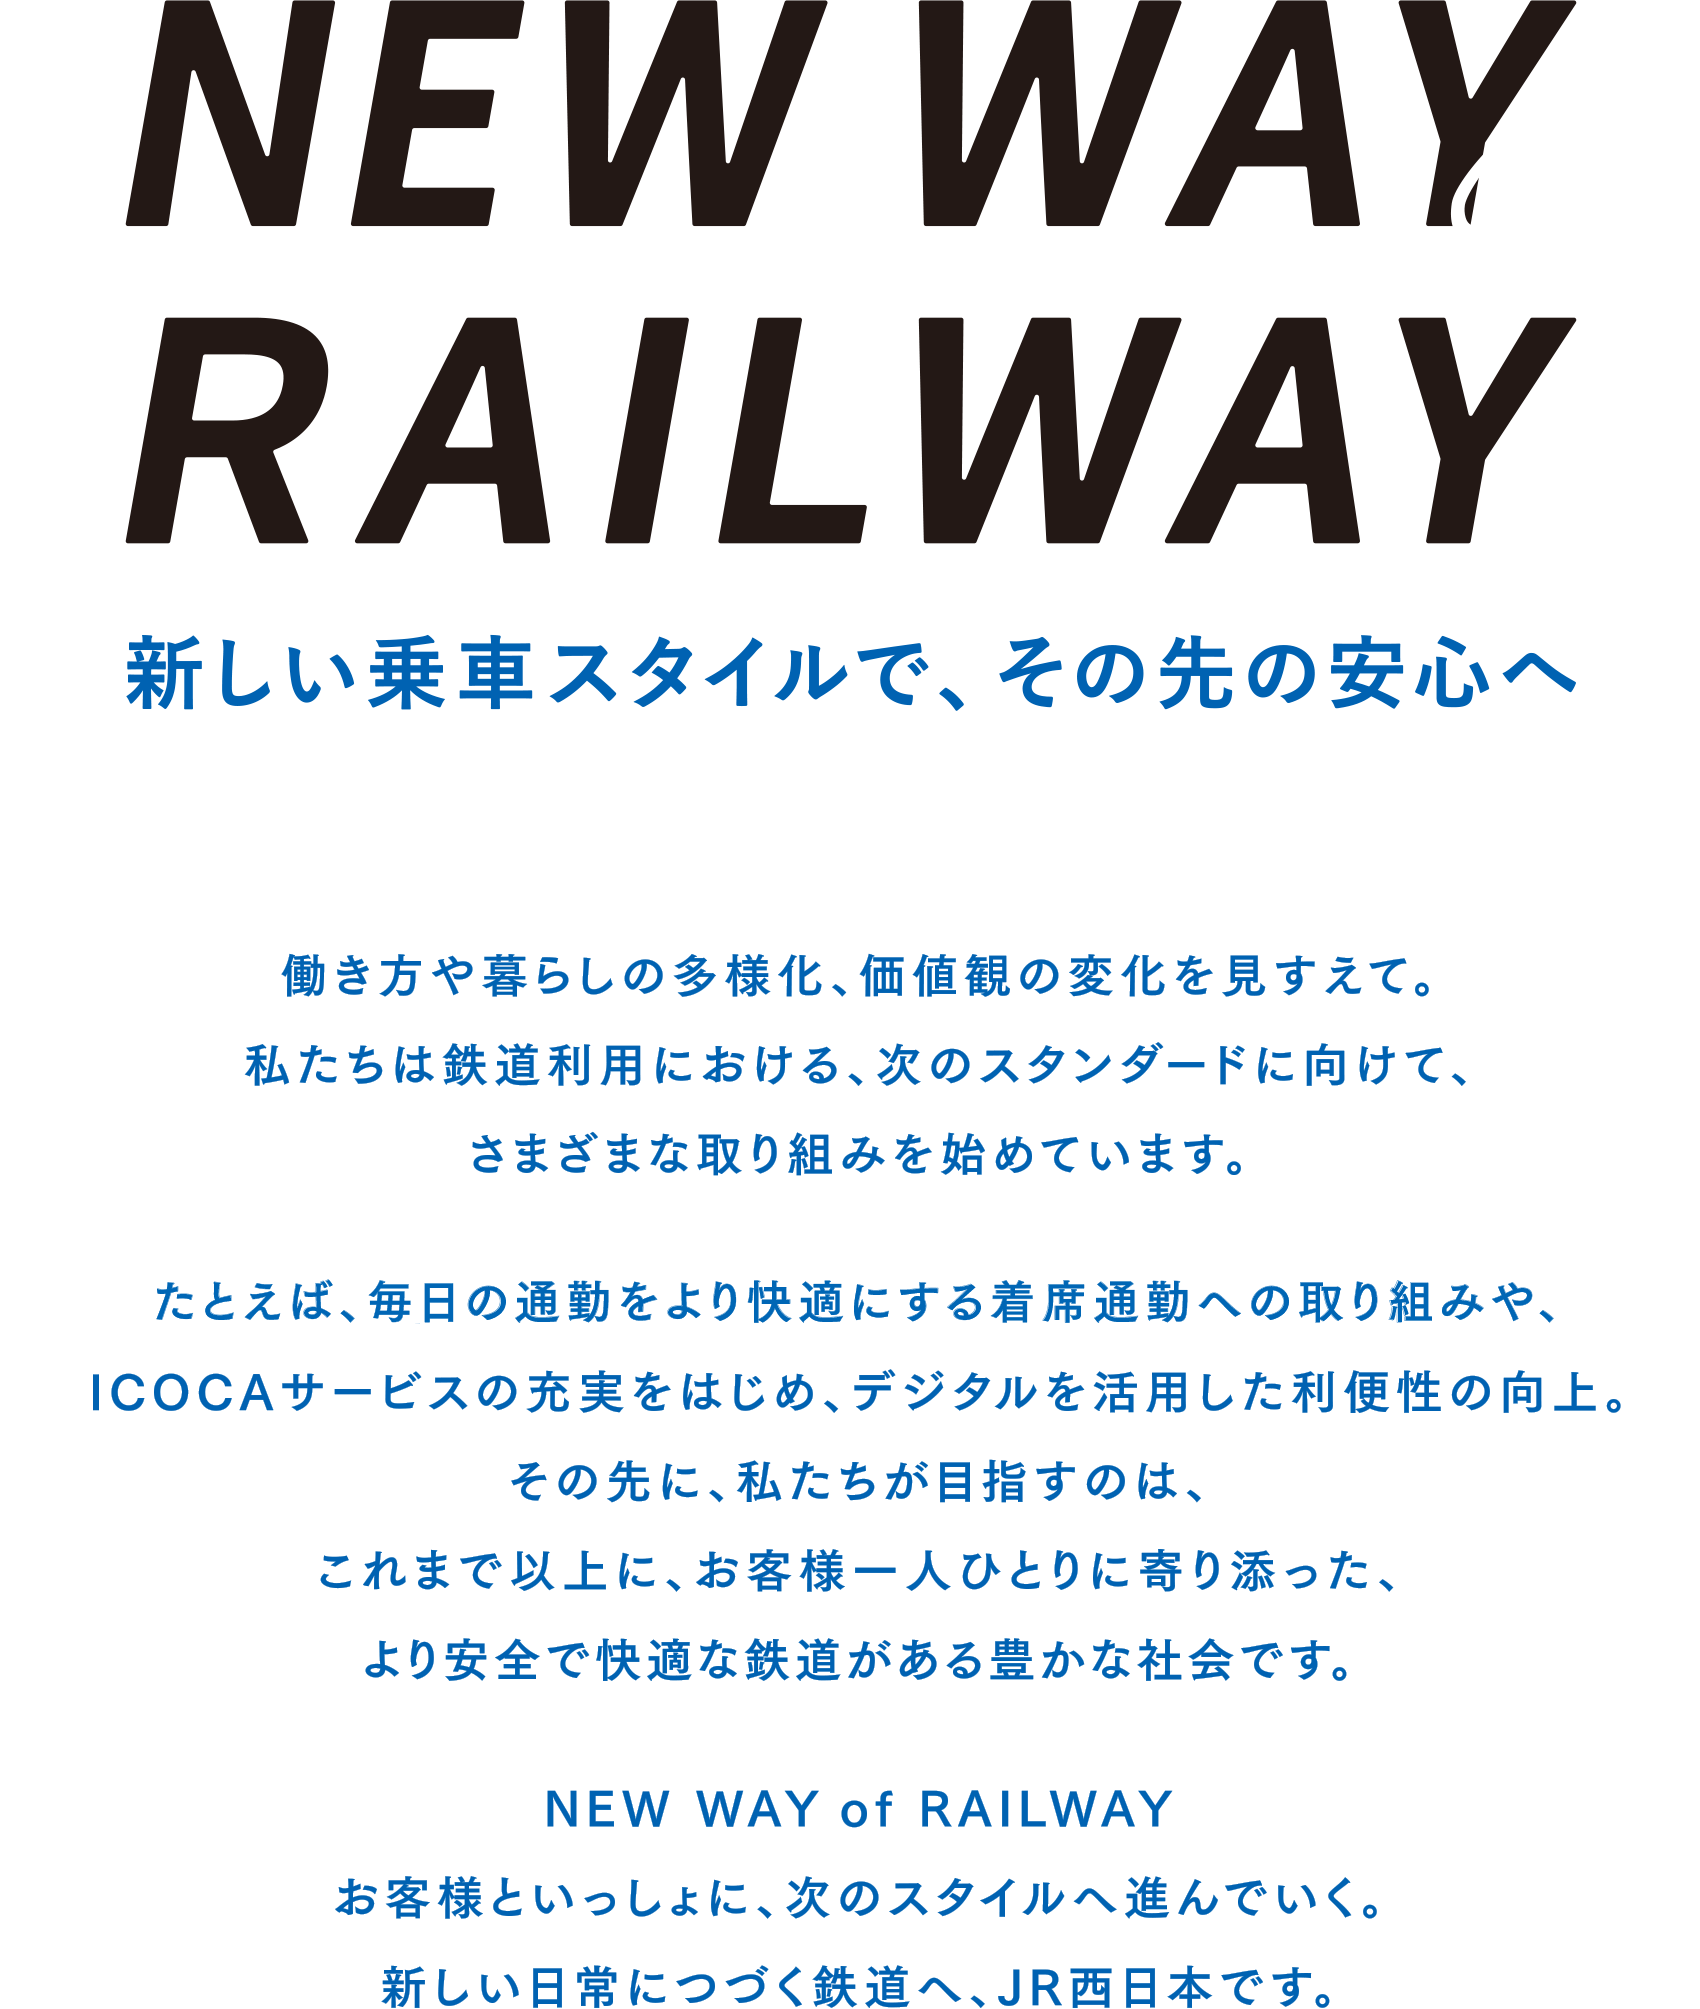 NEW WAY of RAILWAY